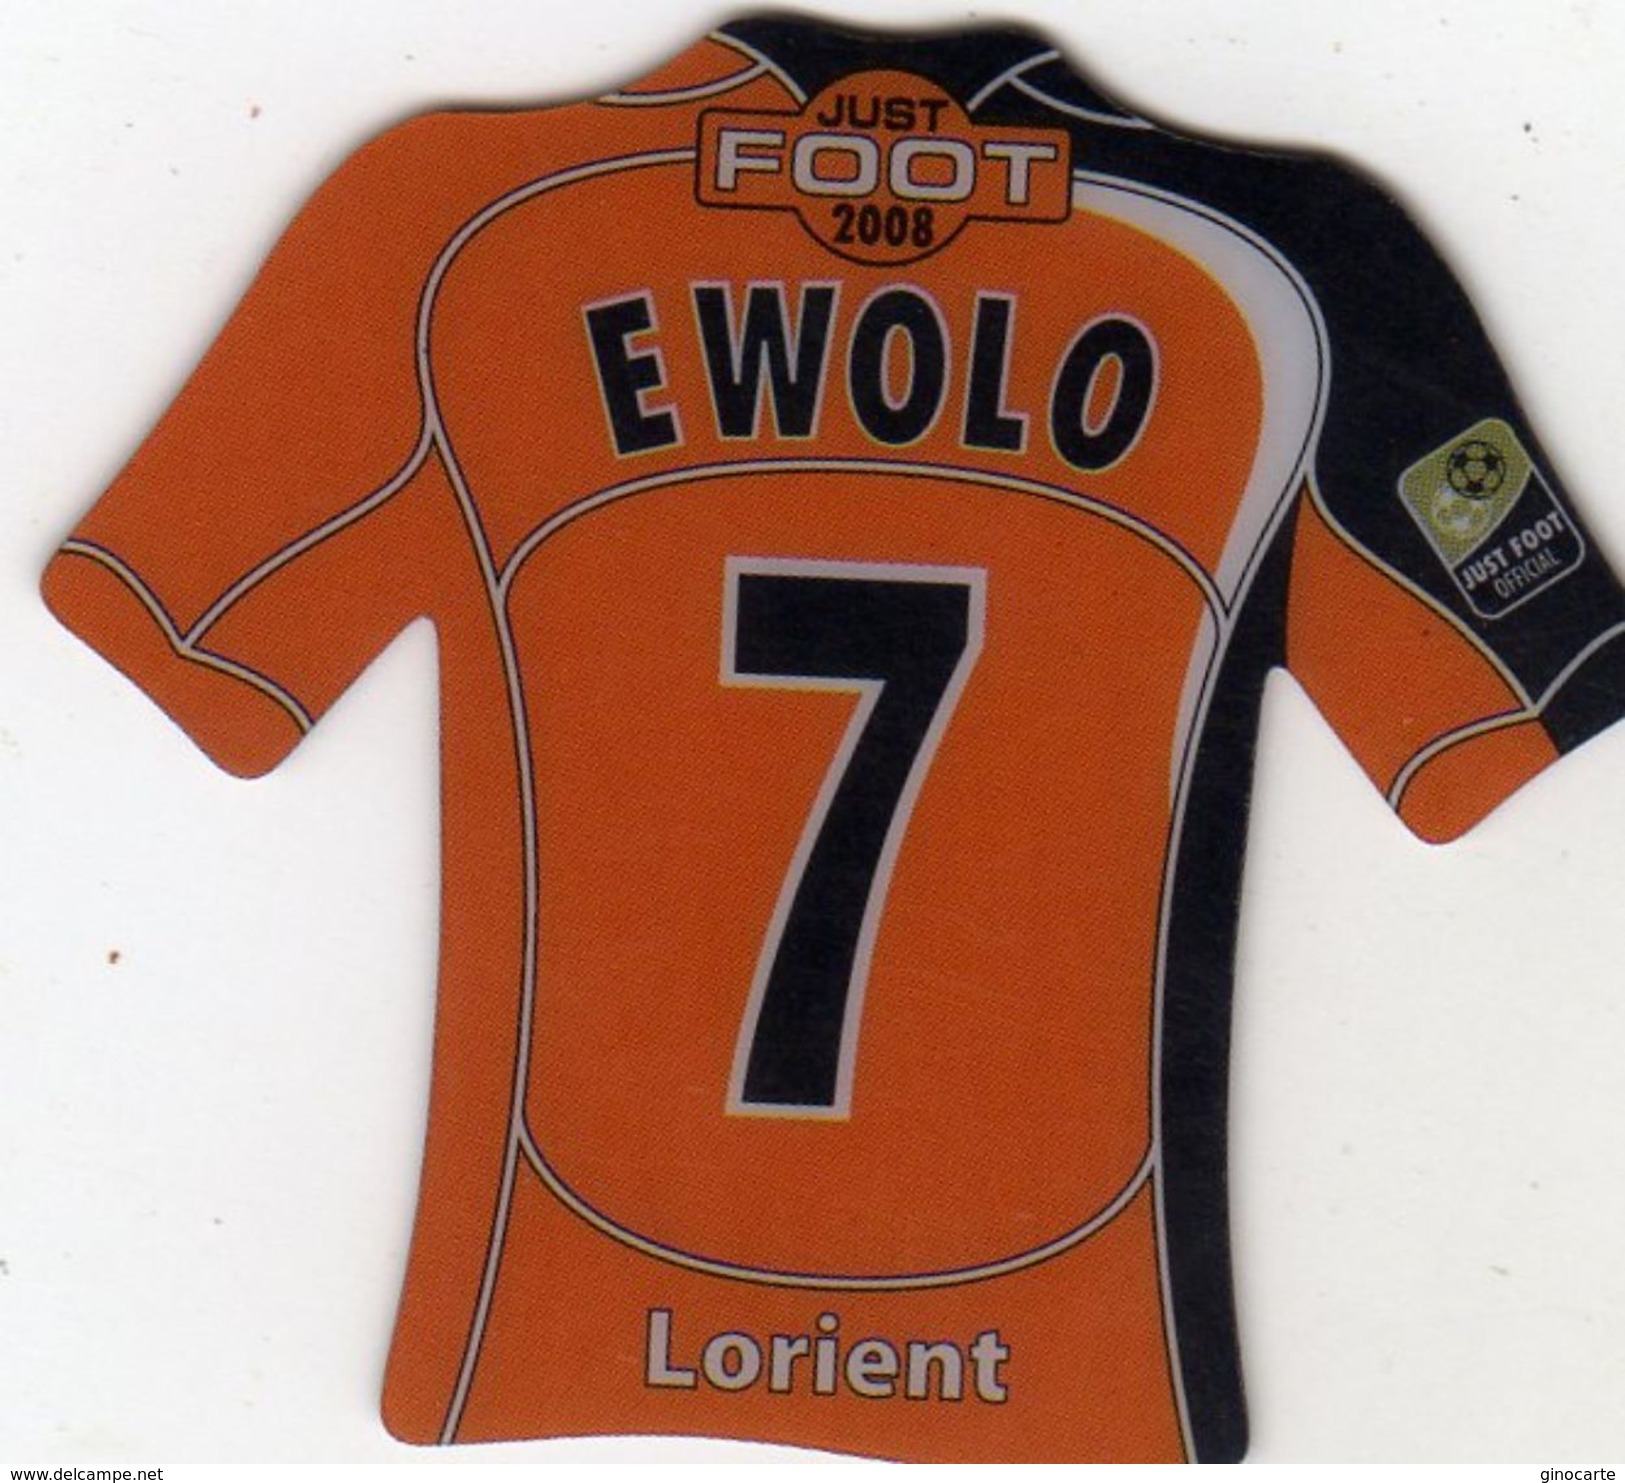 Magnet Magnets Maillot De Football Pitch Lorient Ewolo 2008 - Sport